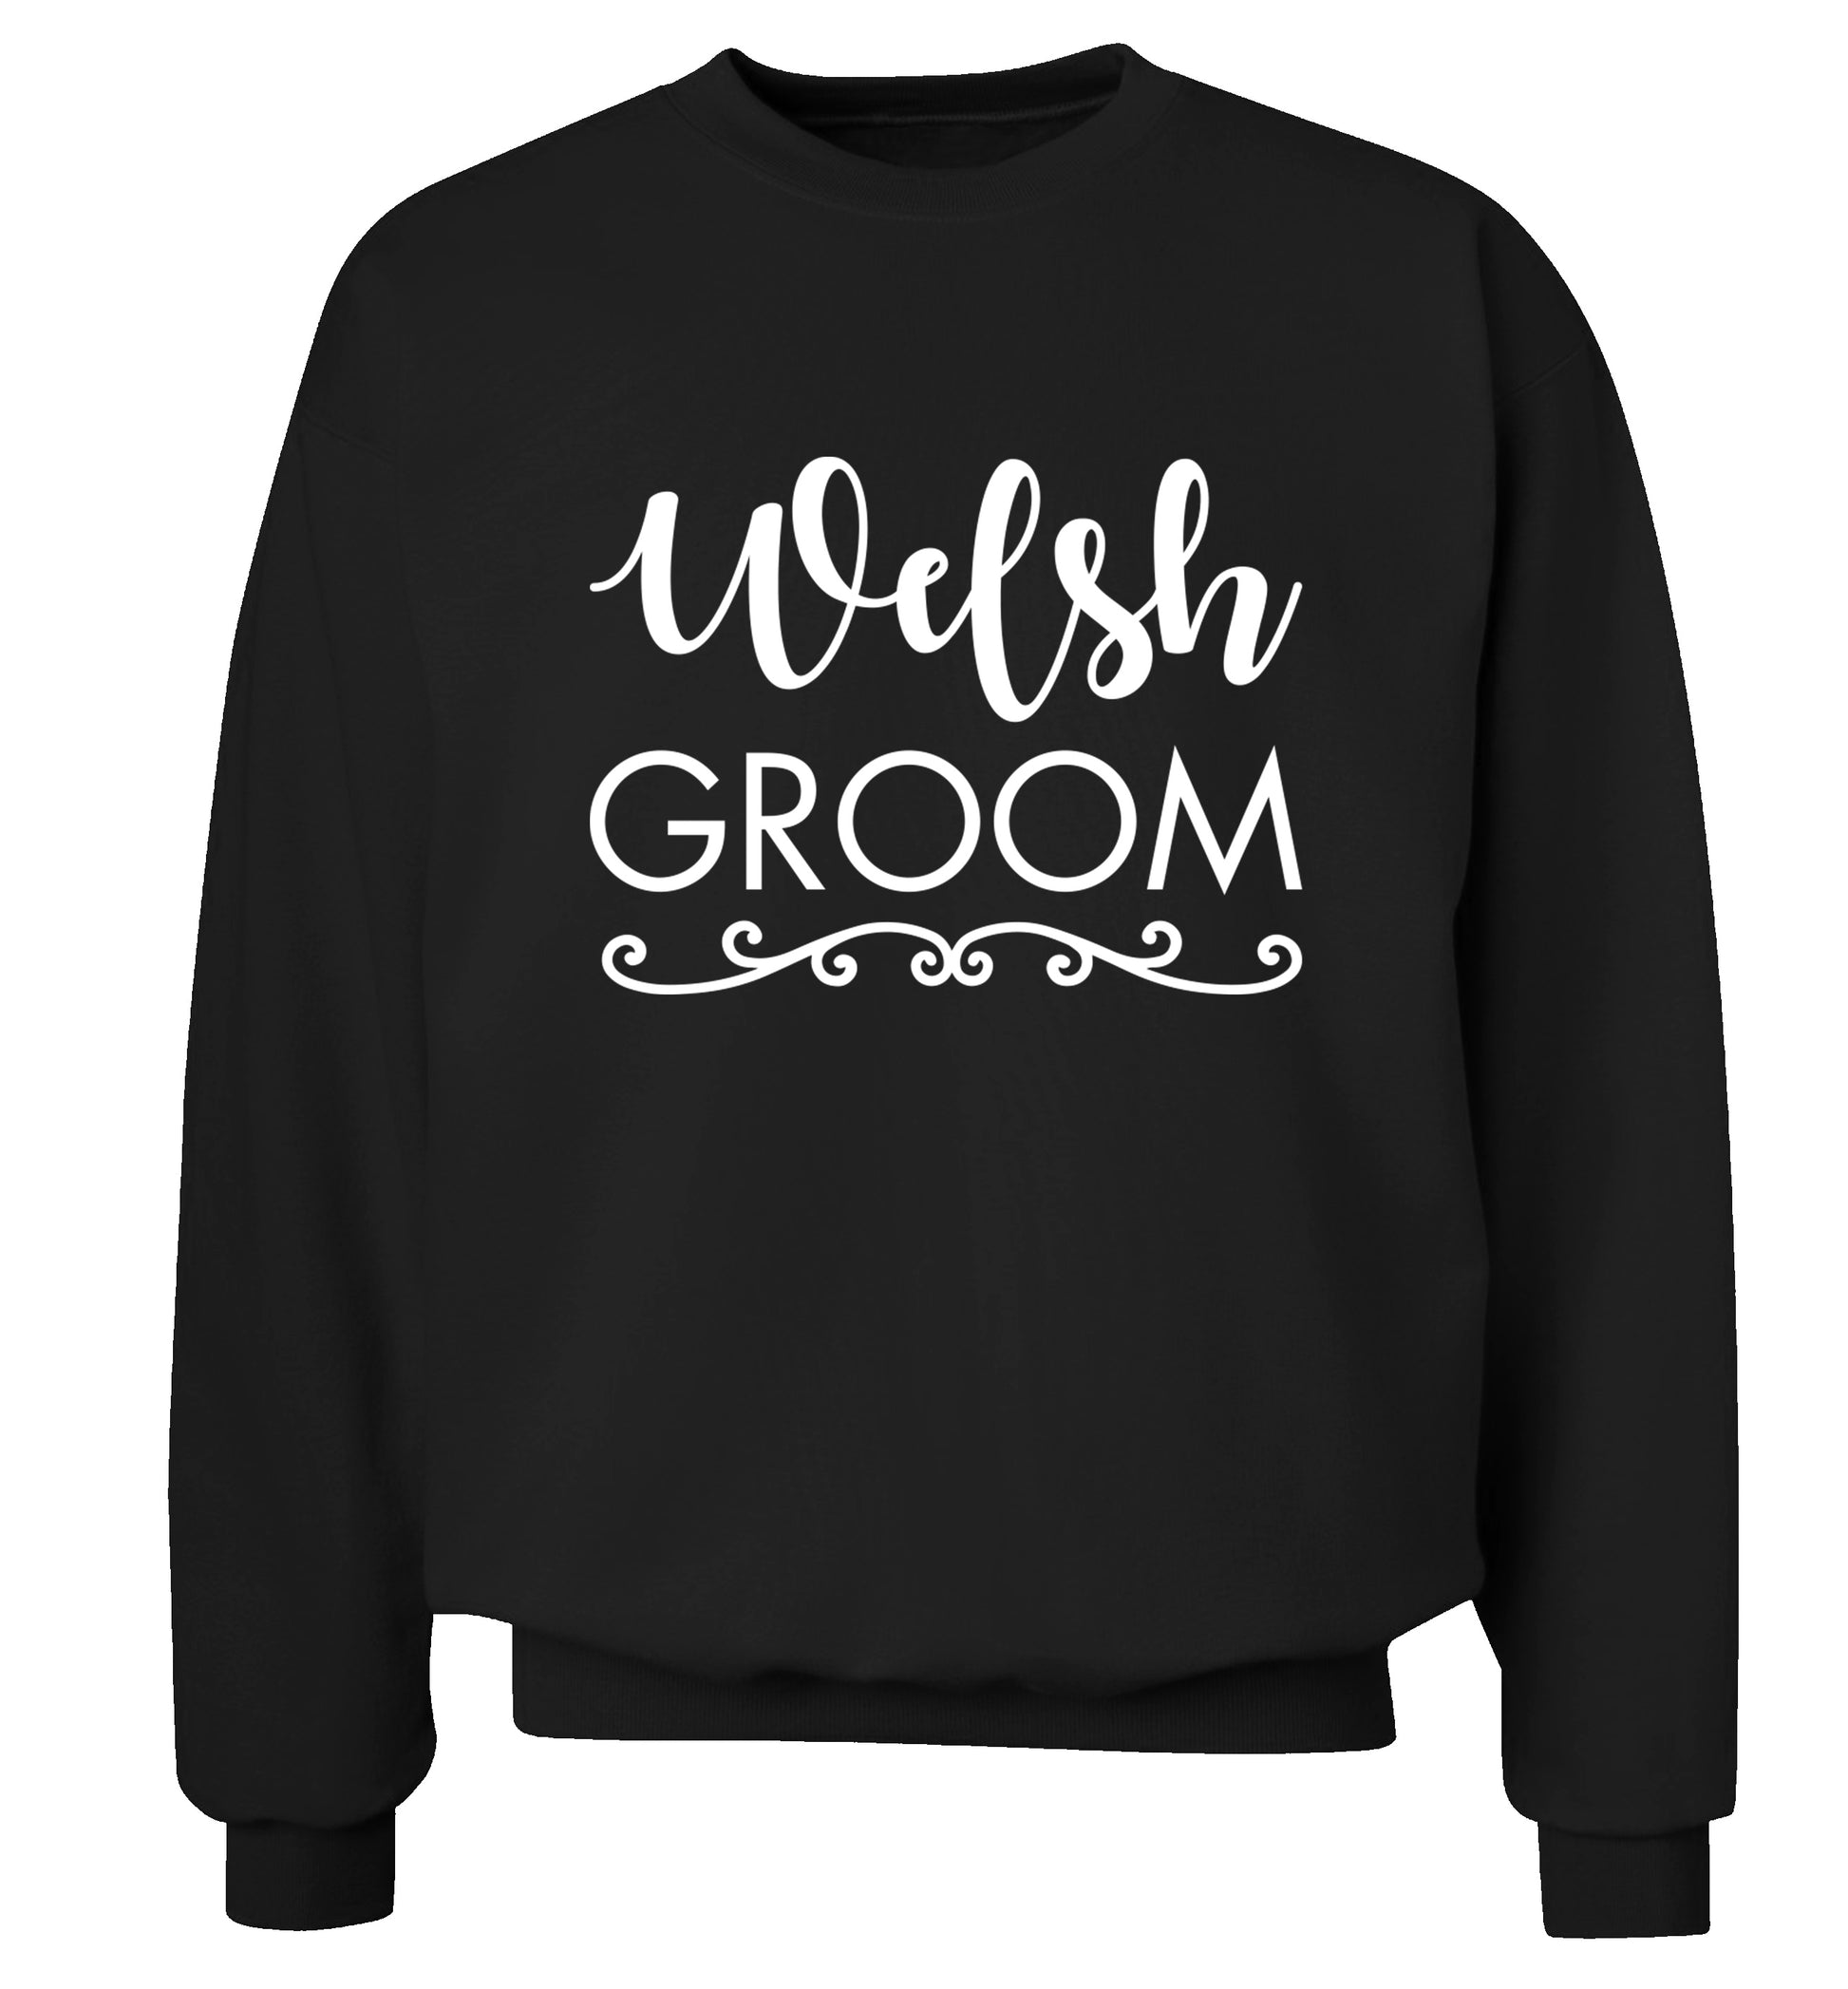 Welsh groom Adult's unisex black Sweater 2XL